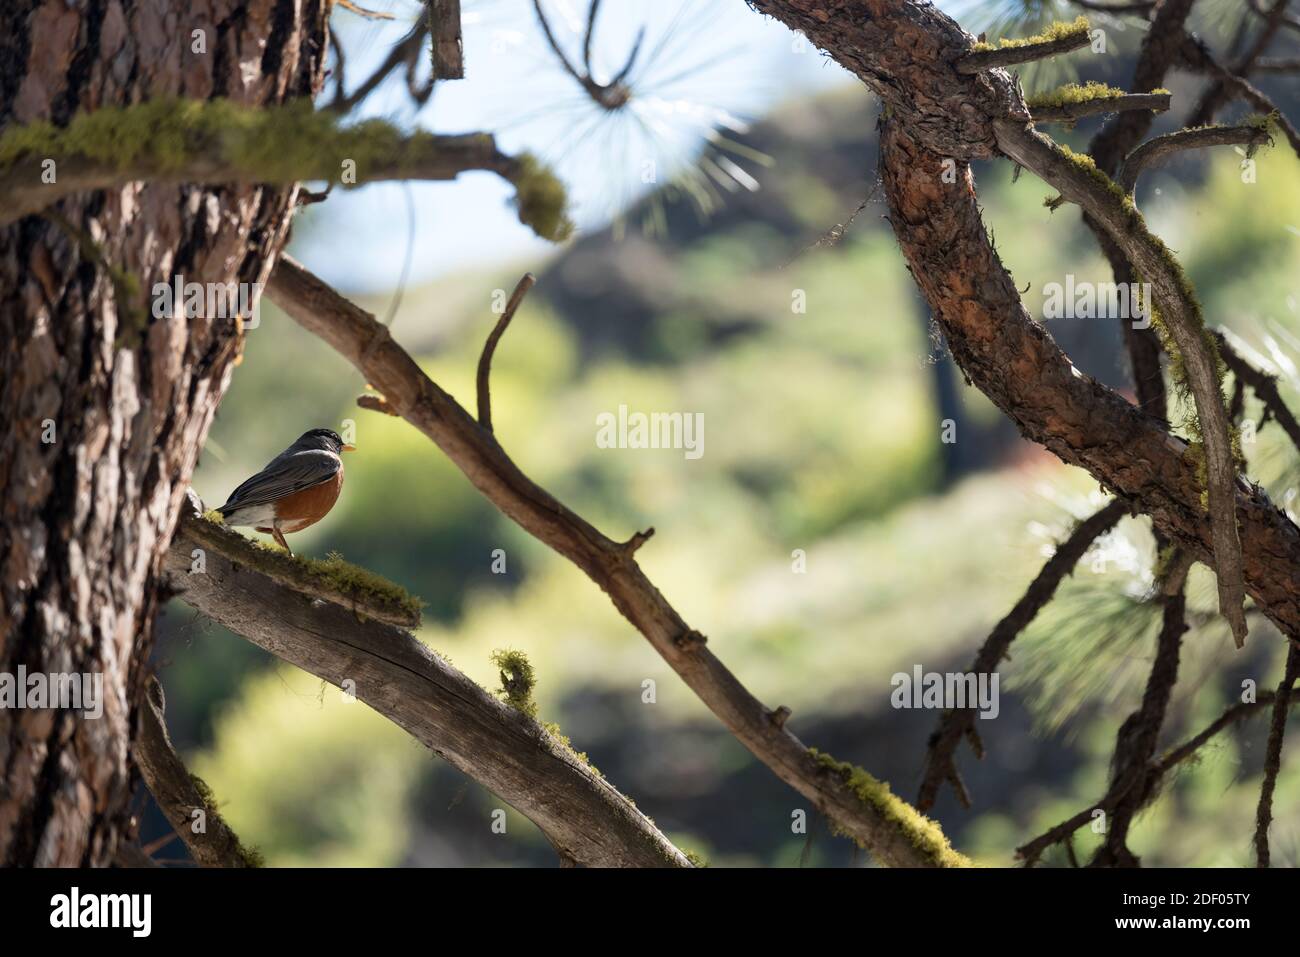 Robin on the branch of Ponderosa pine tree, Wenaha River Canyon, Oregon. Stock Photo